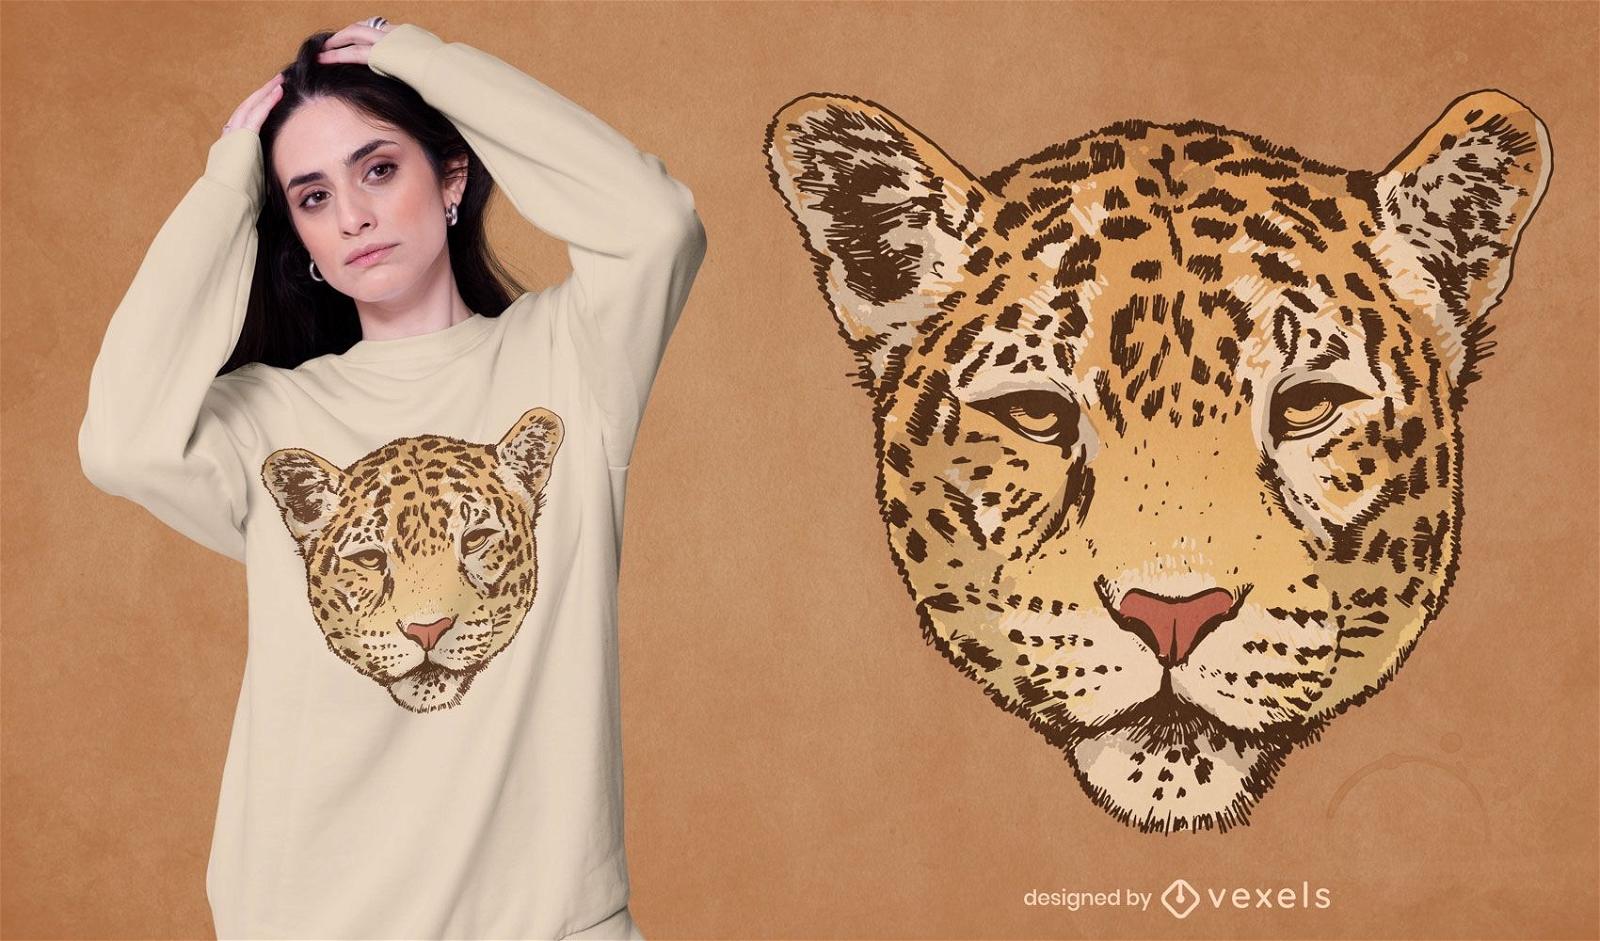 Leopard face illustration t-shirt design